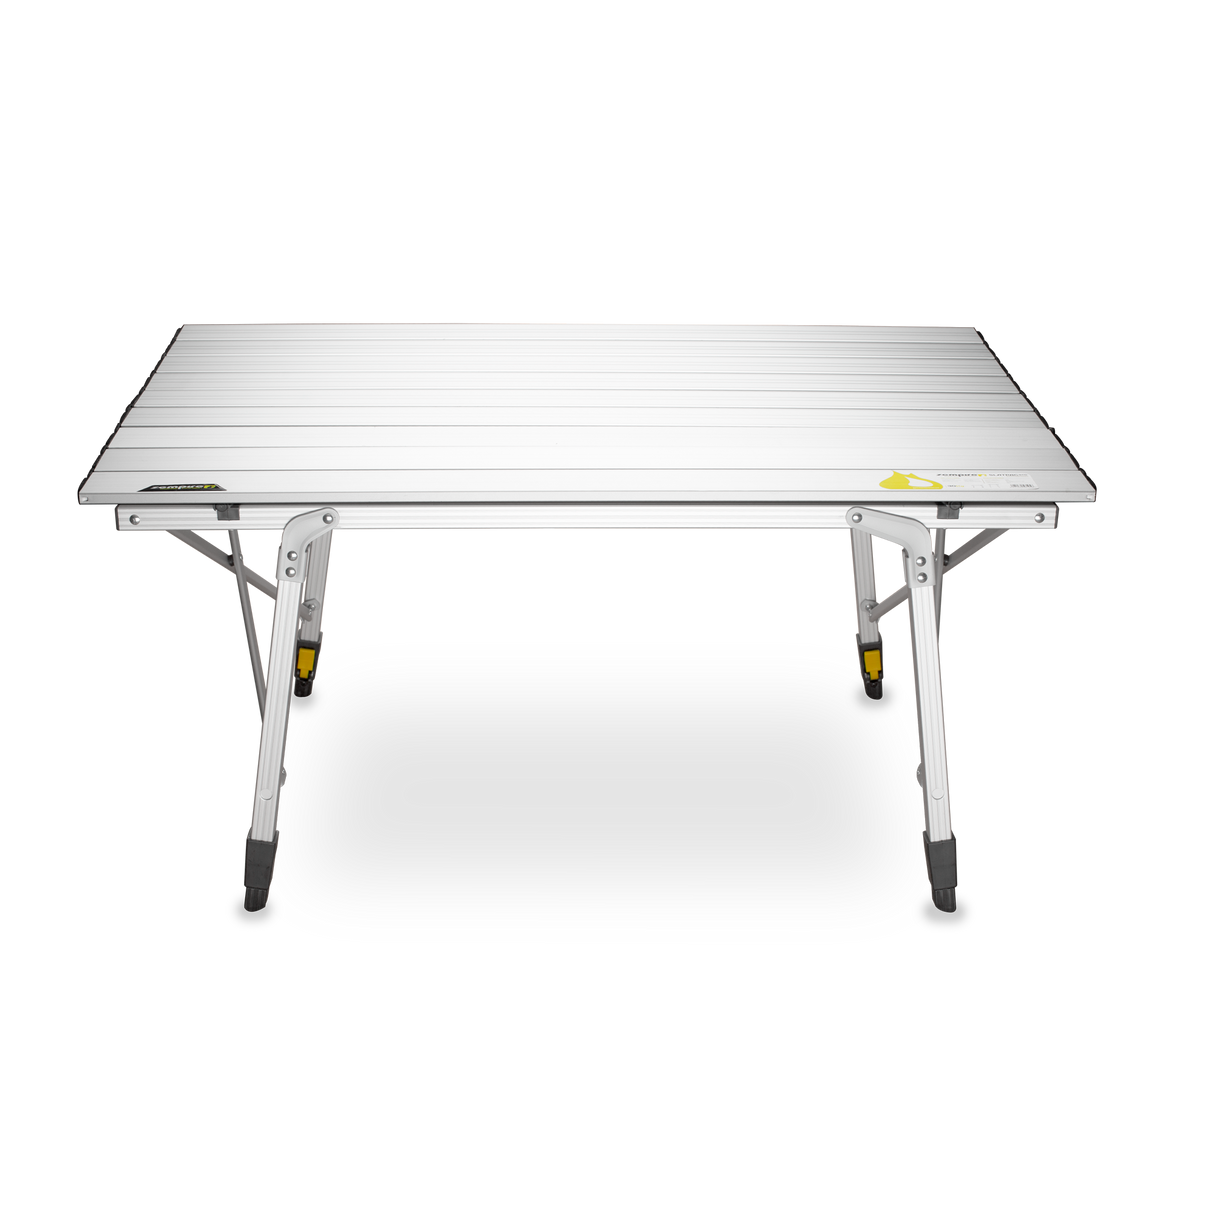 Zempire Slatpac Standard Table